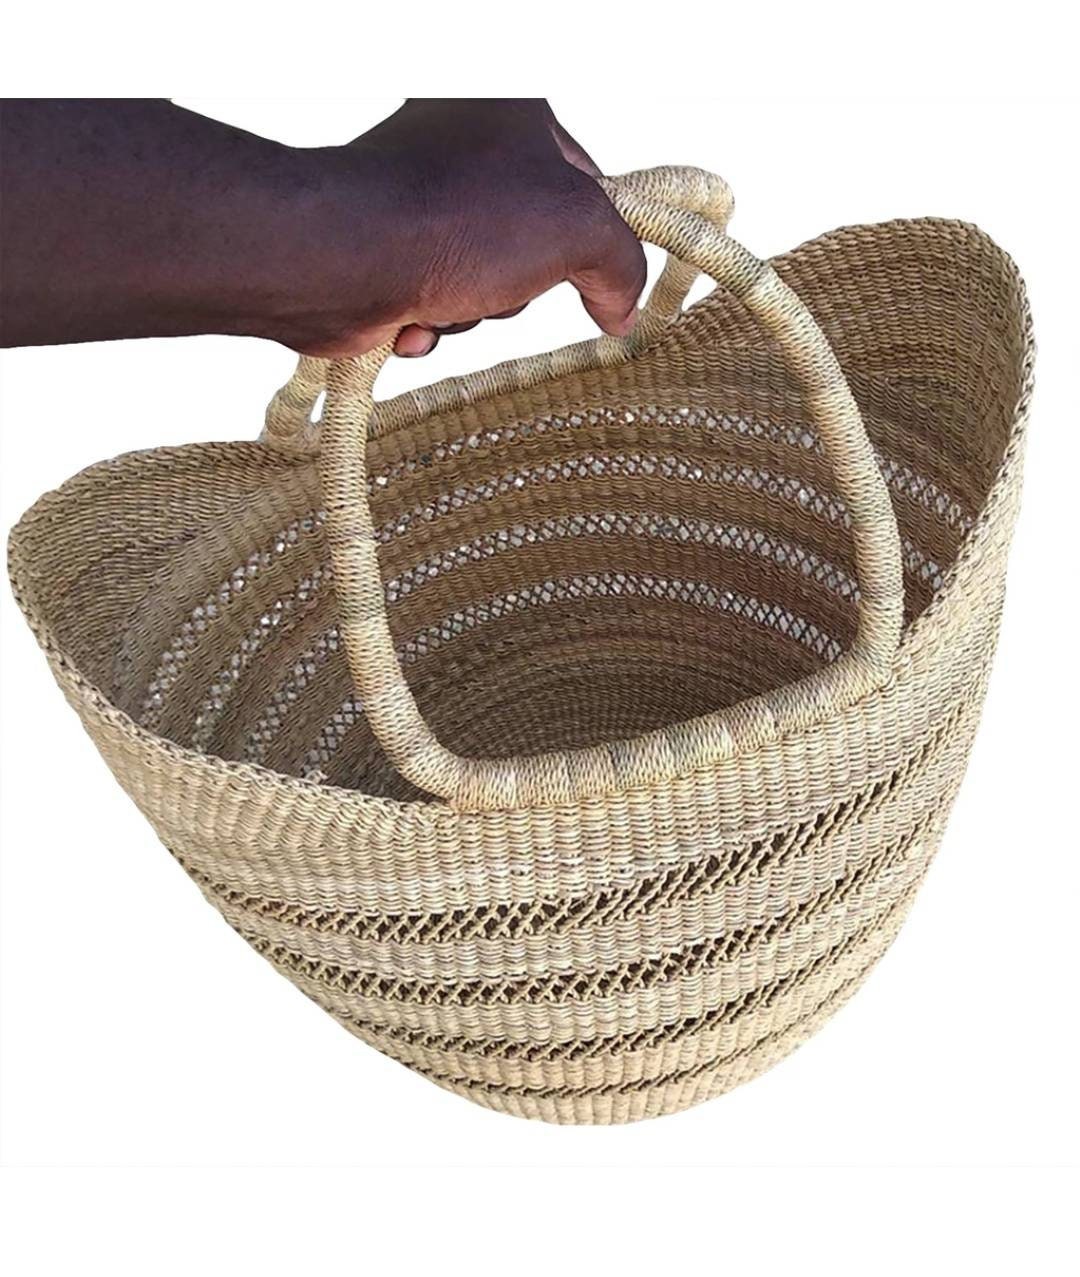 Shopping basket |African Market basket | Market bag | Kids  basket |Picnic basket |Fruit basket |Bolga basket | Straw bag | U shopper - AfricanheritageGH